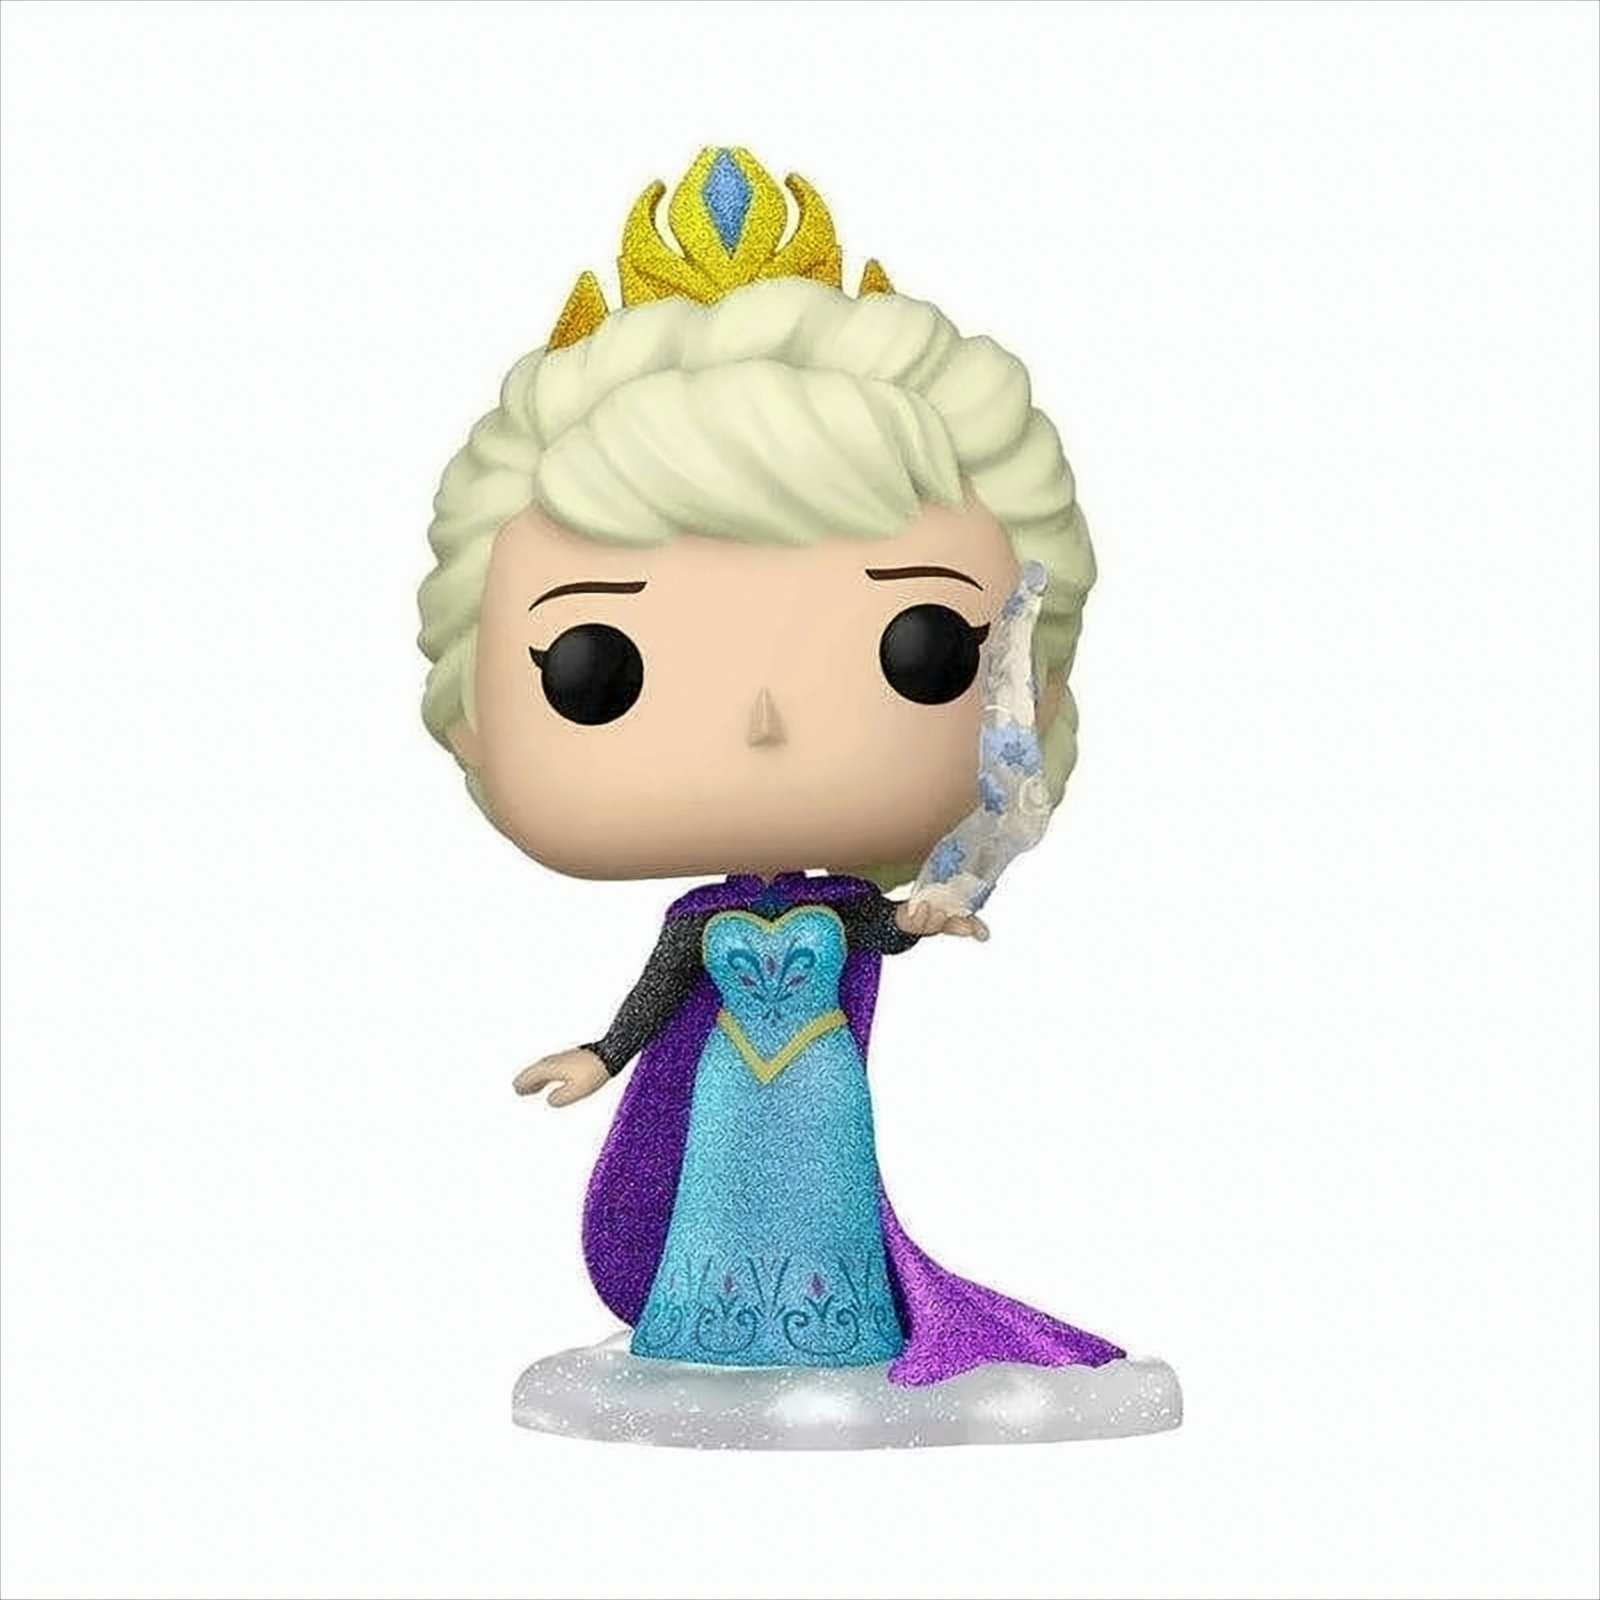 - Elsa - (Diamond Disney Glitter) Frozen POP